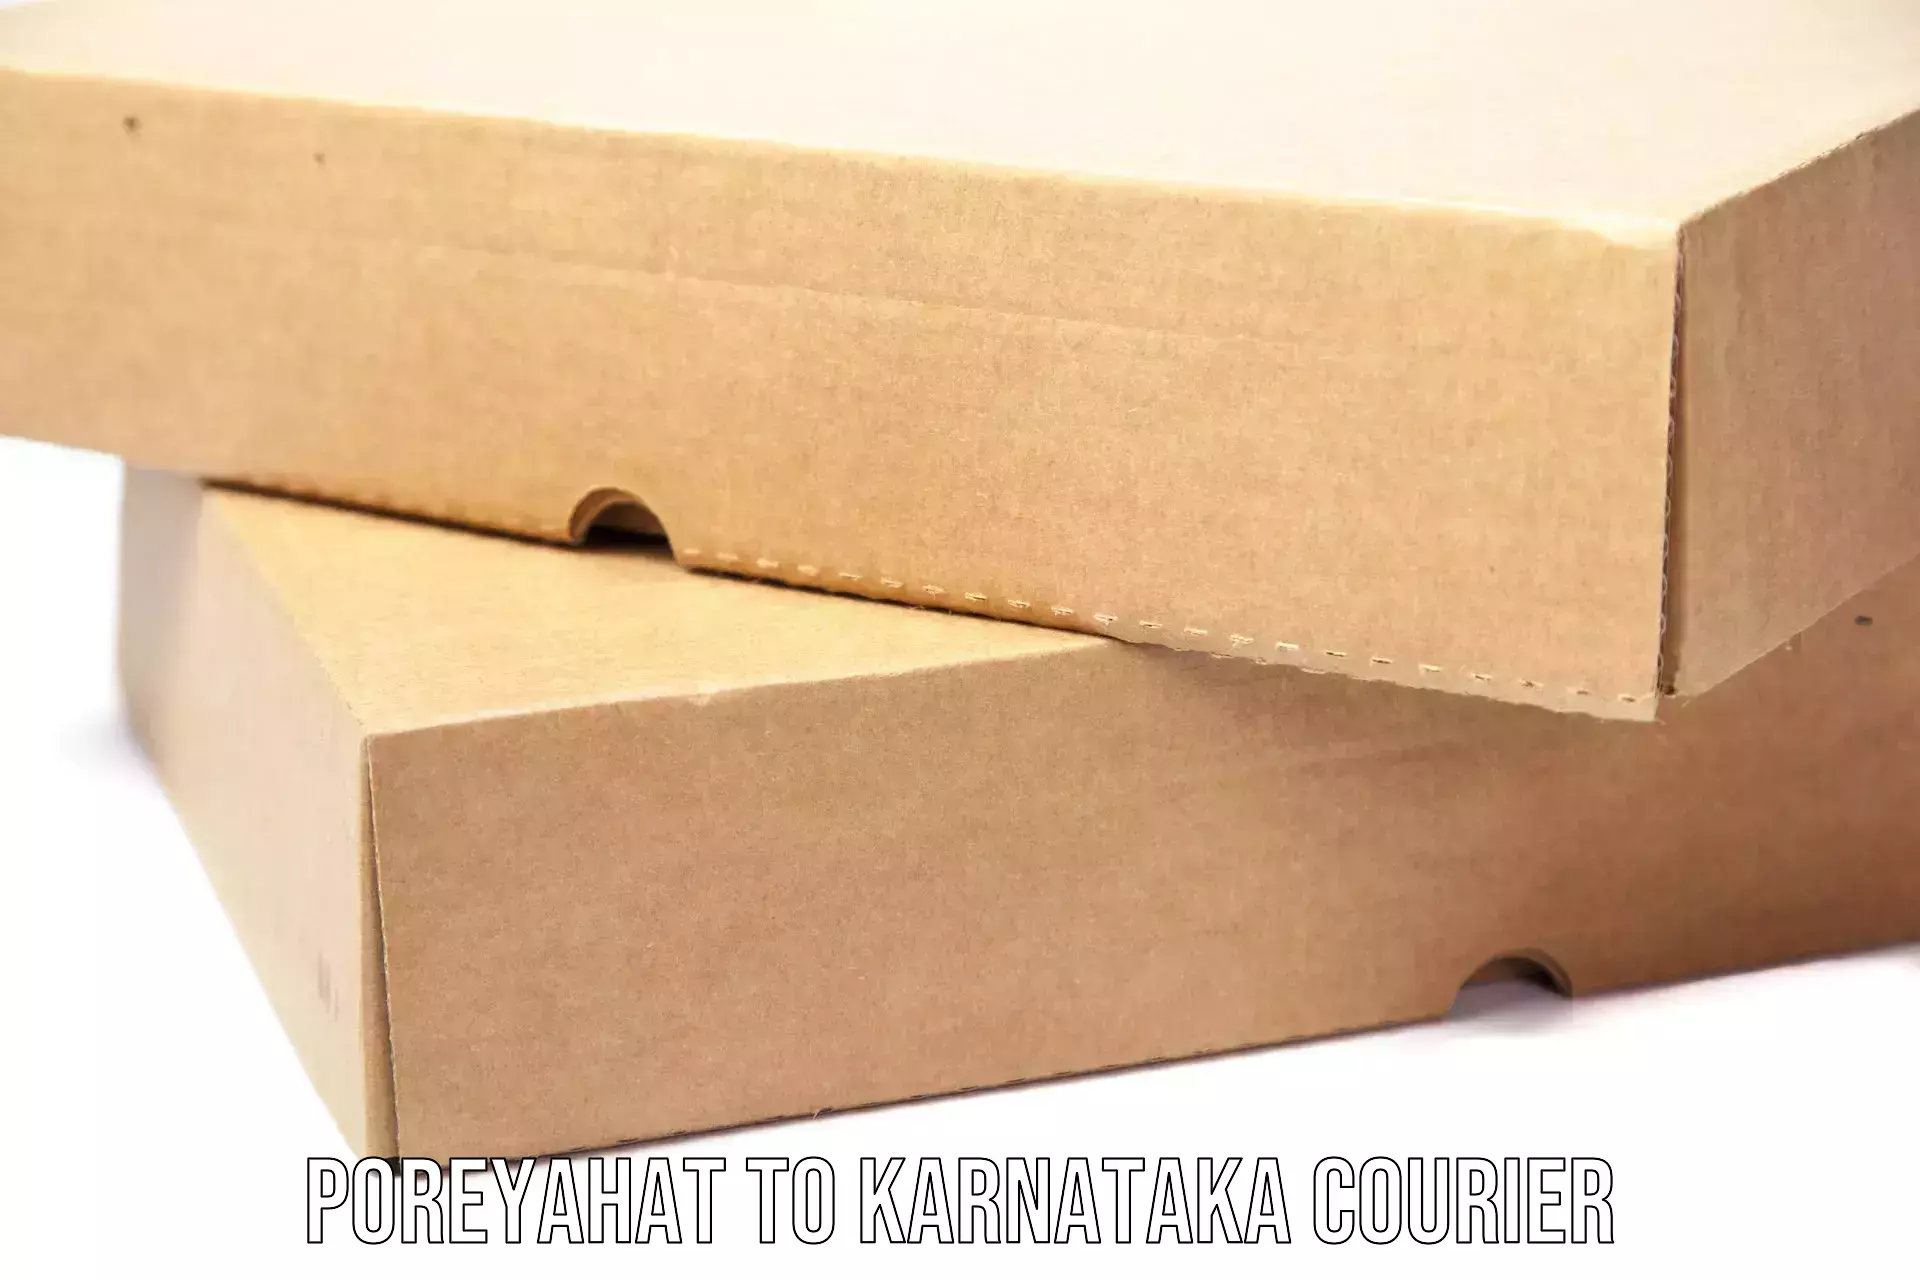 Tech-enabled shipping Poreyahat to Karnataka